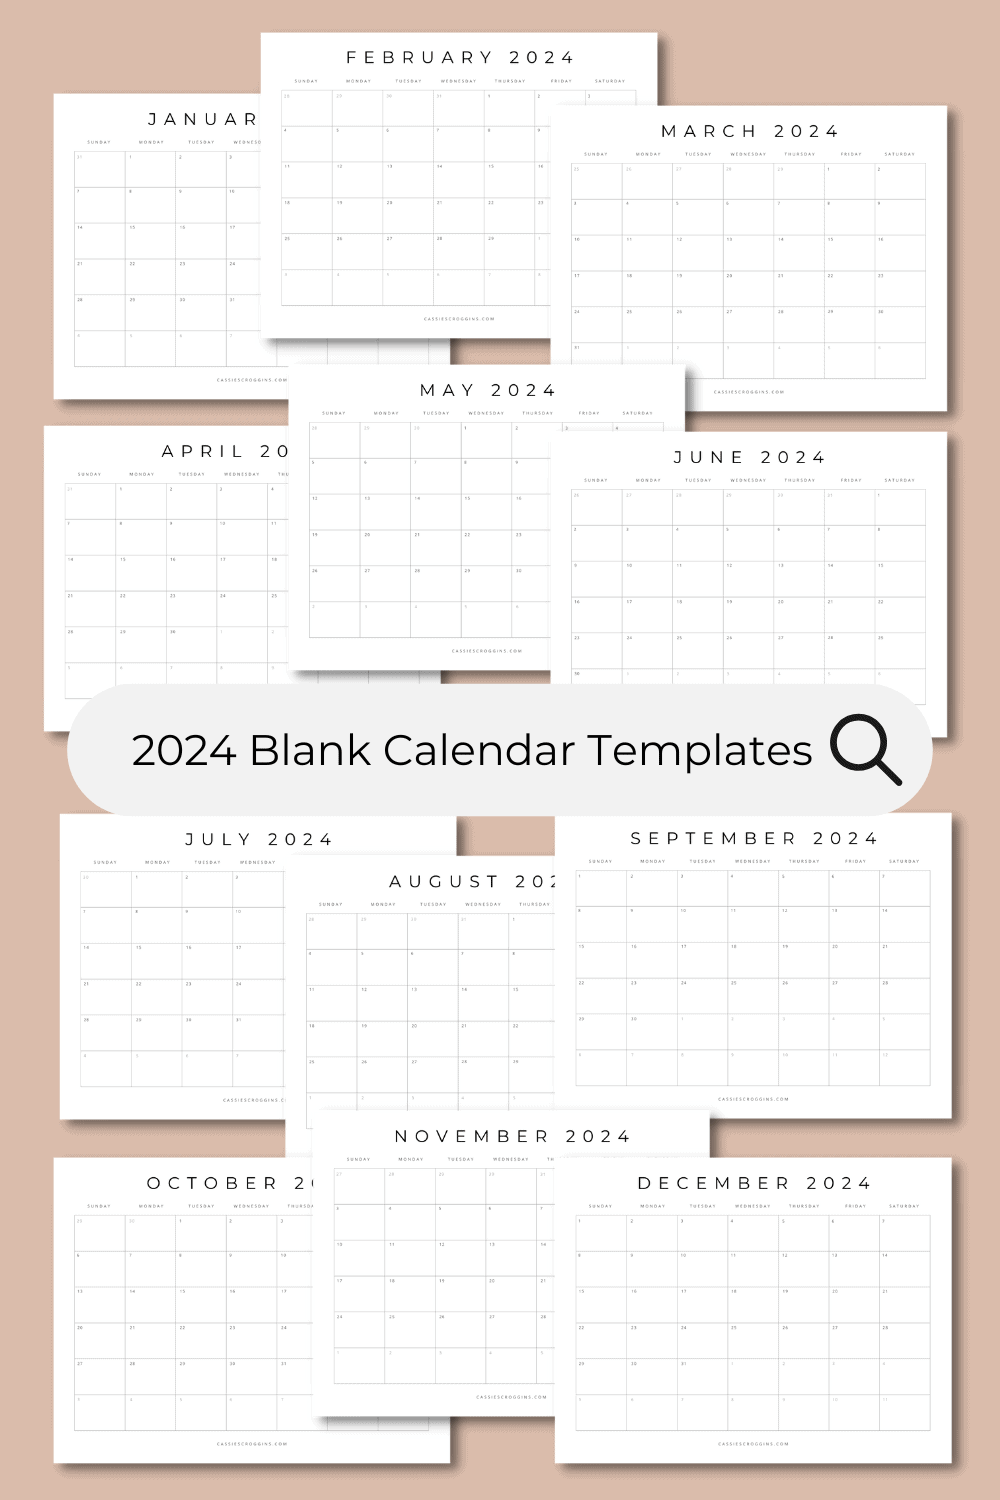 Free Printable 2024 Blank Calendar Templates (All 12 Months) intended for Free Printable Blank Calendar 2024 Template